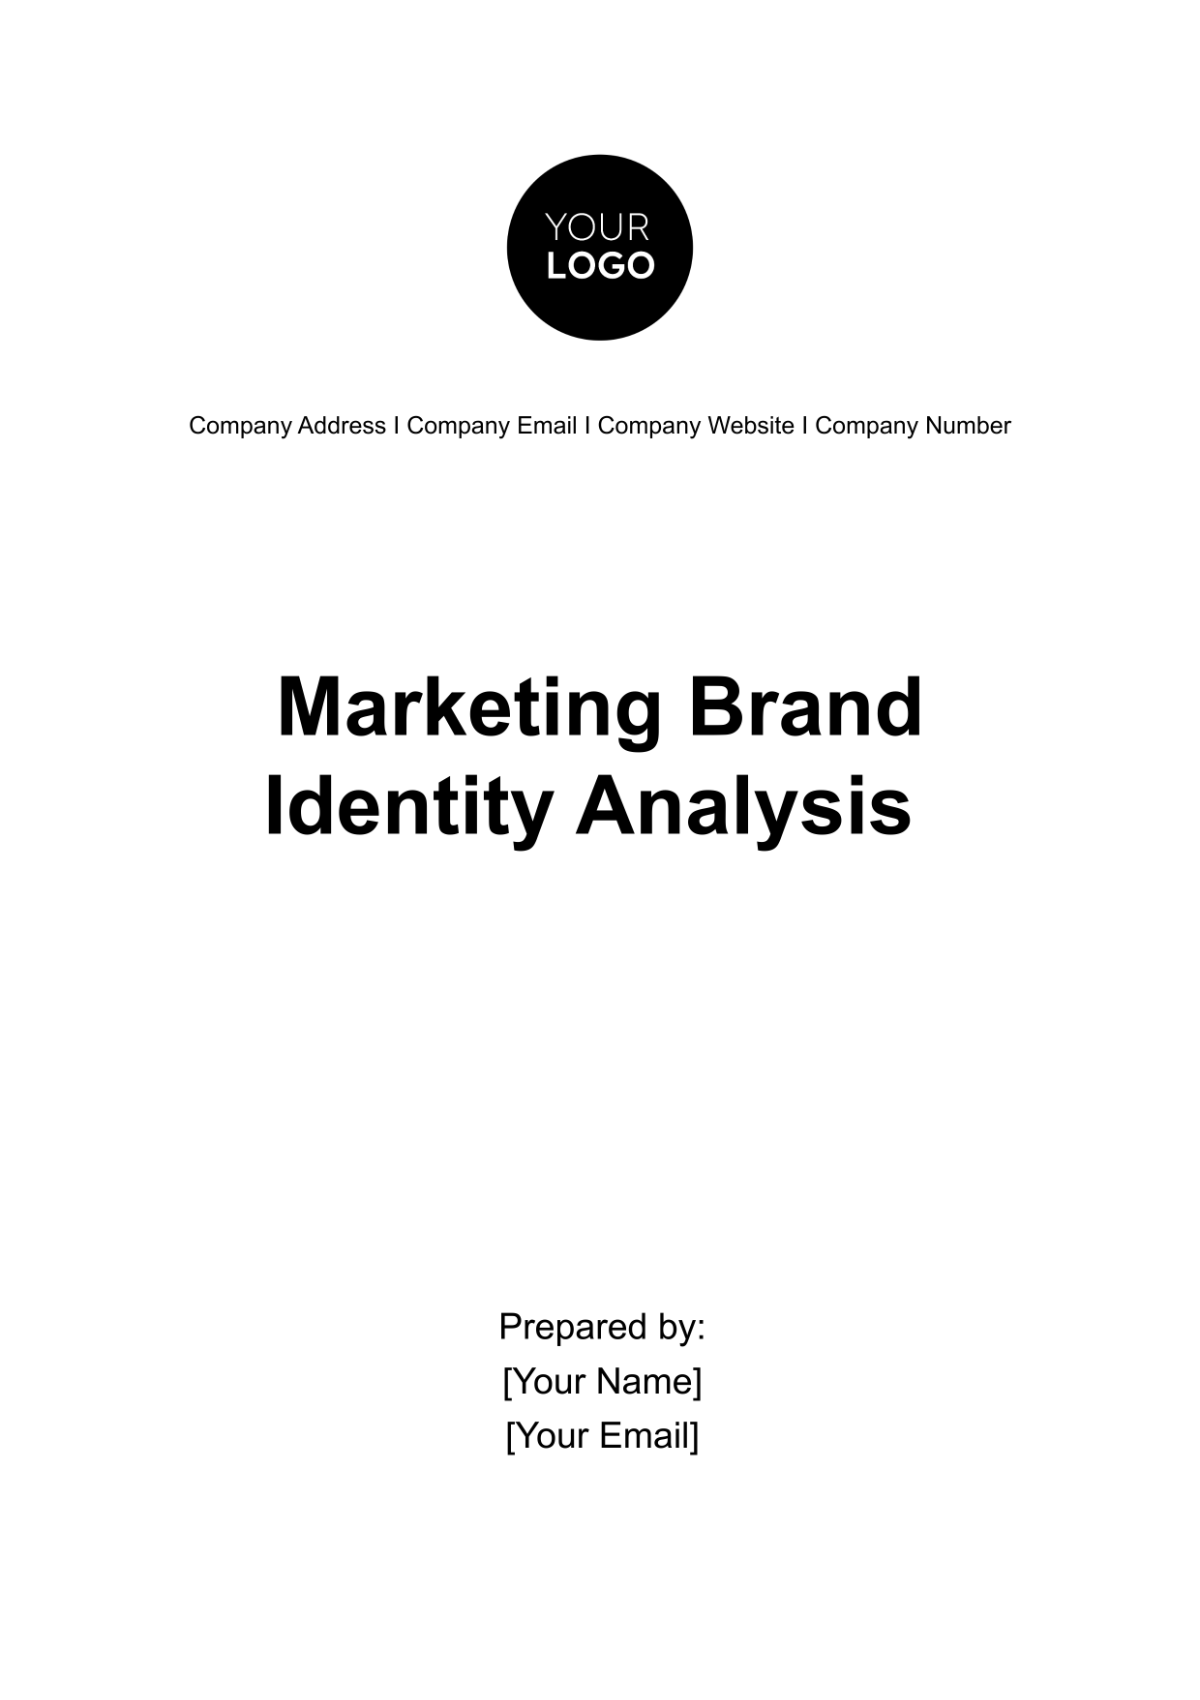 Marketing Brand Identity Analysis Template